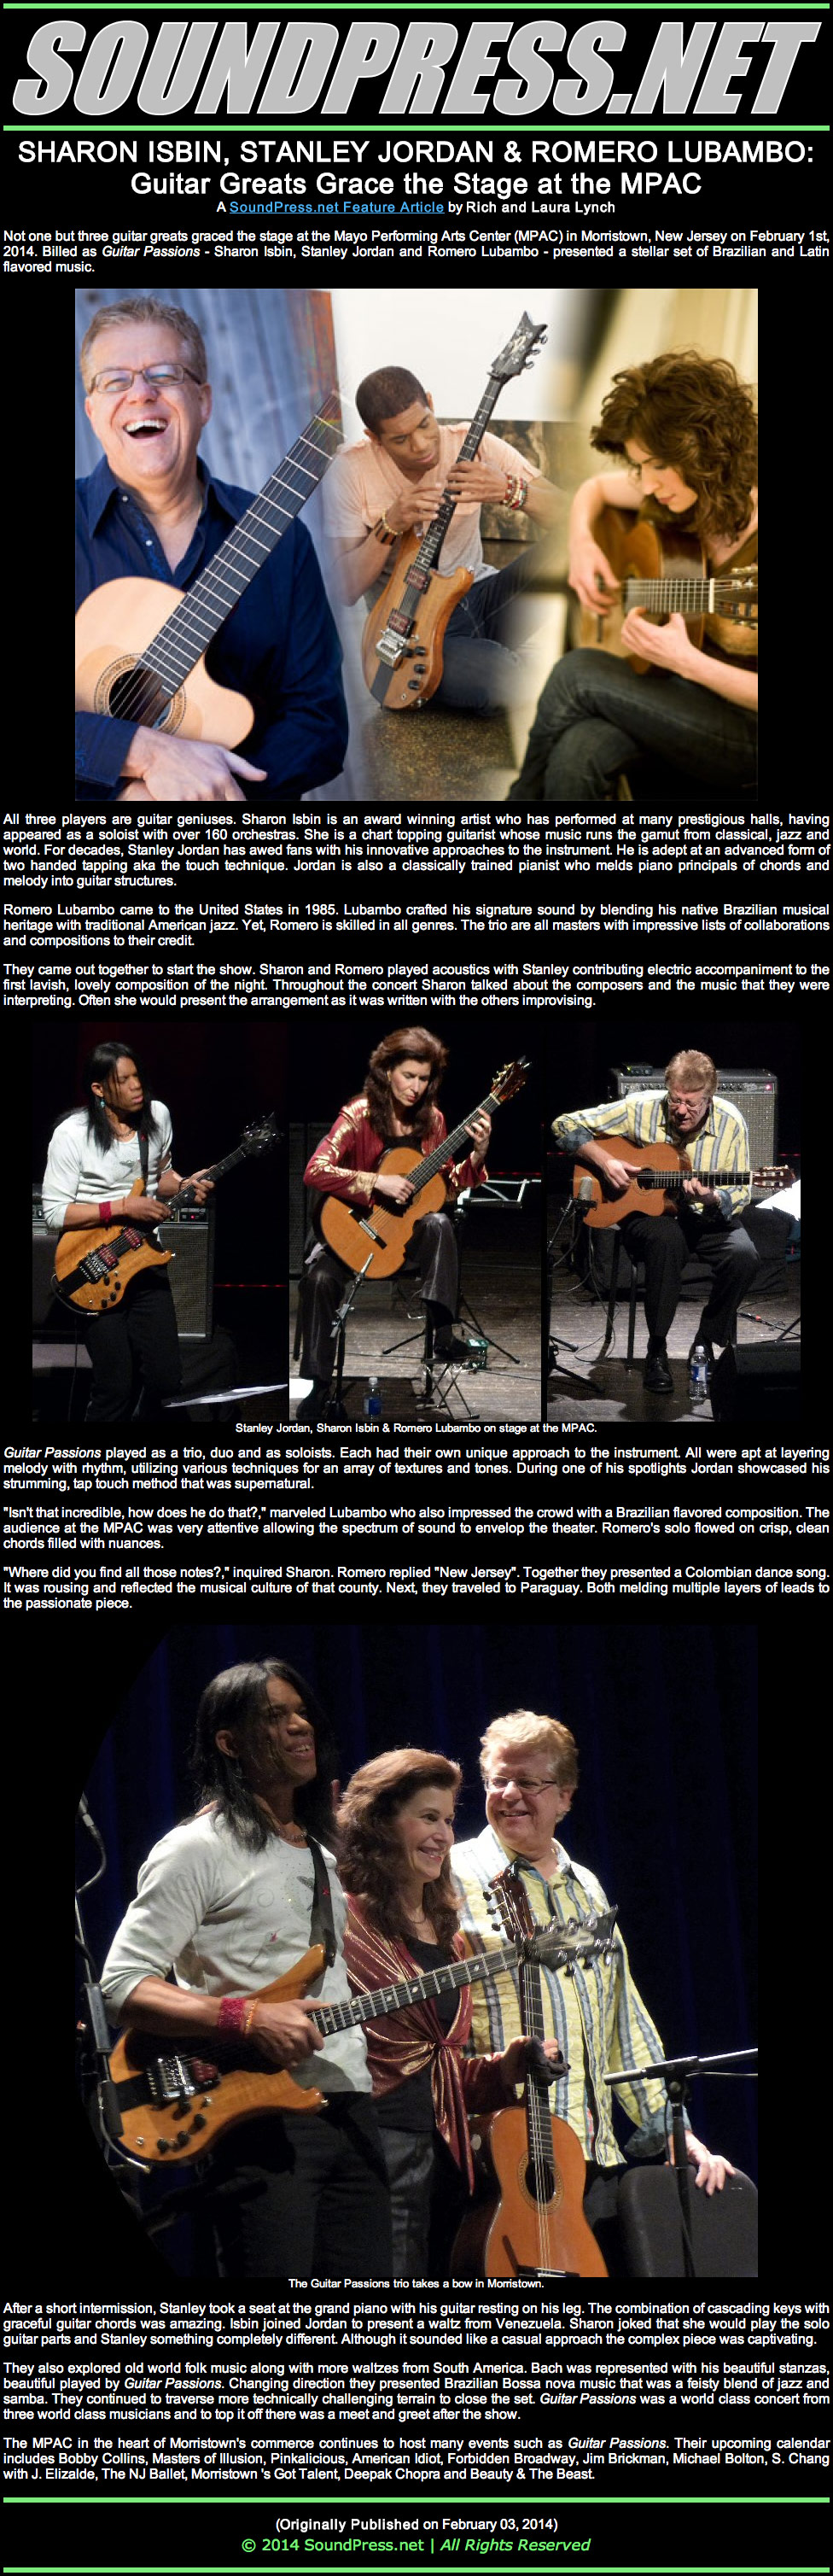 SHARON ISBIN, STANLEY JORDAN & ROMERO LUBAMBO: Guitar Greats Grace the Stage at the MPAC